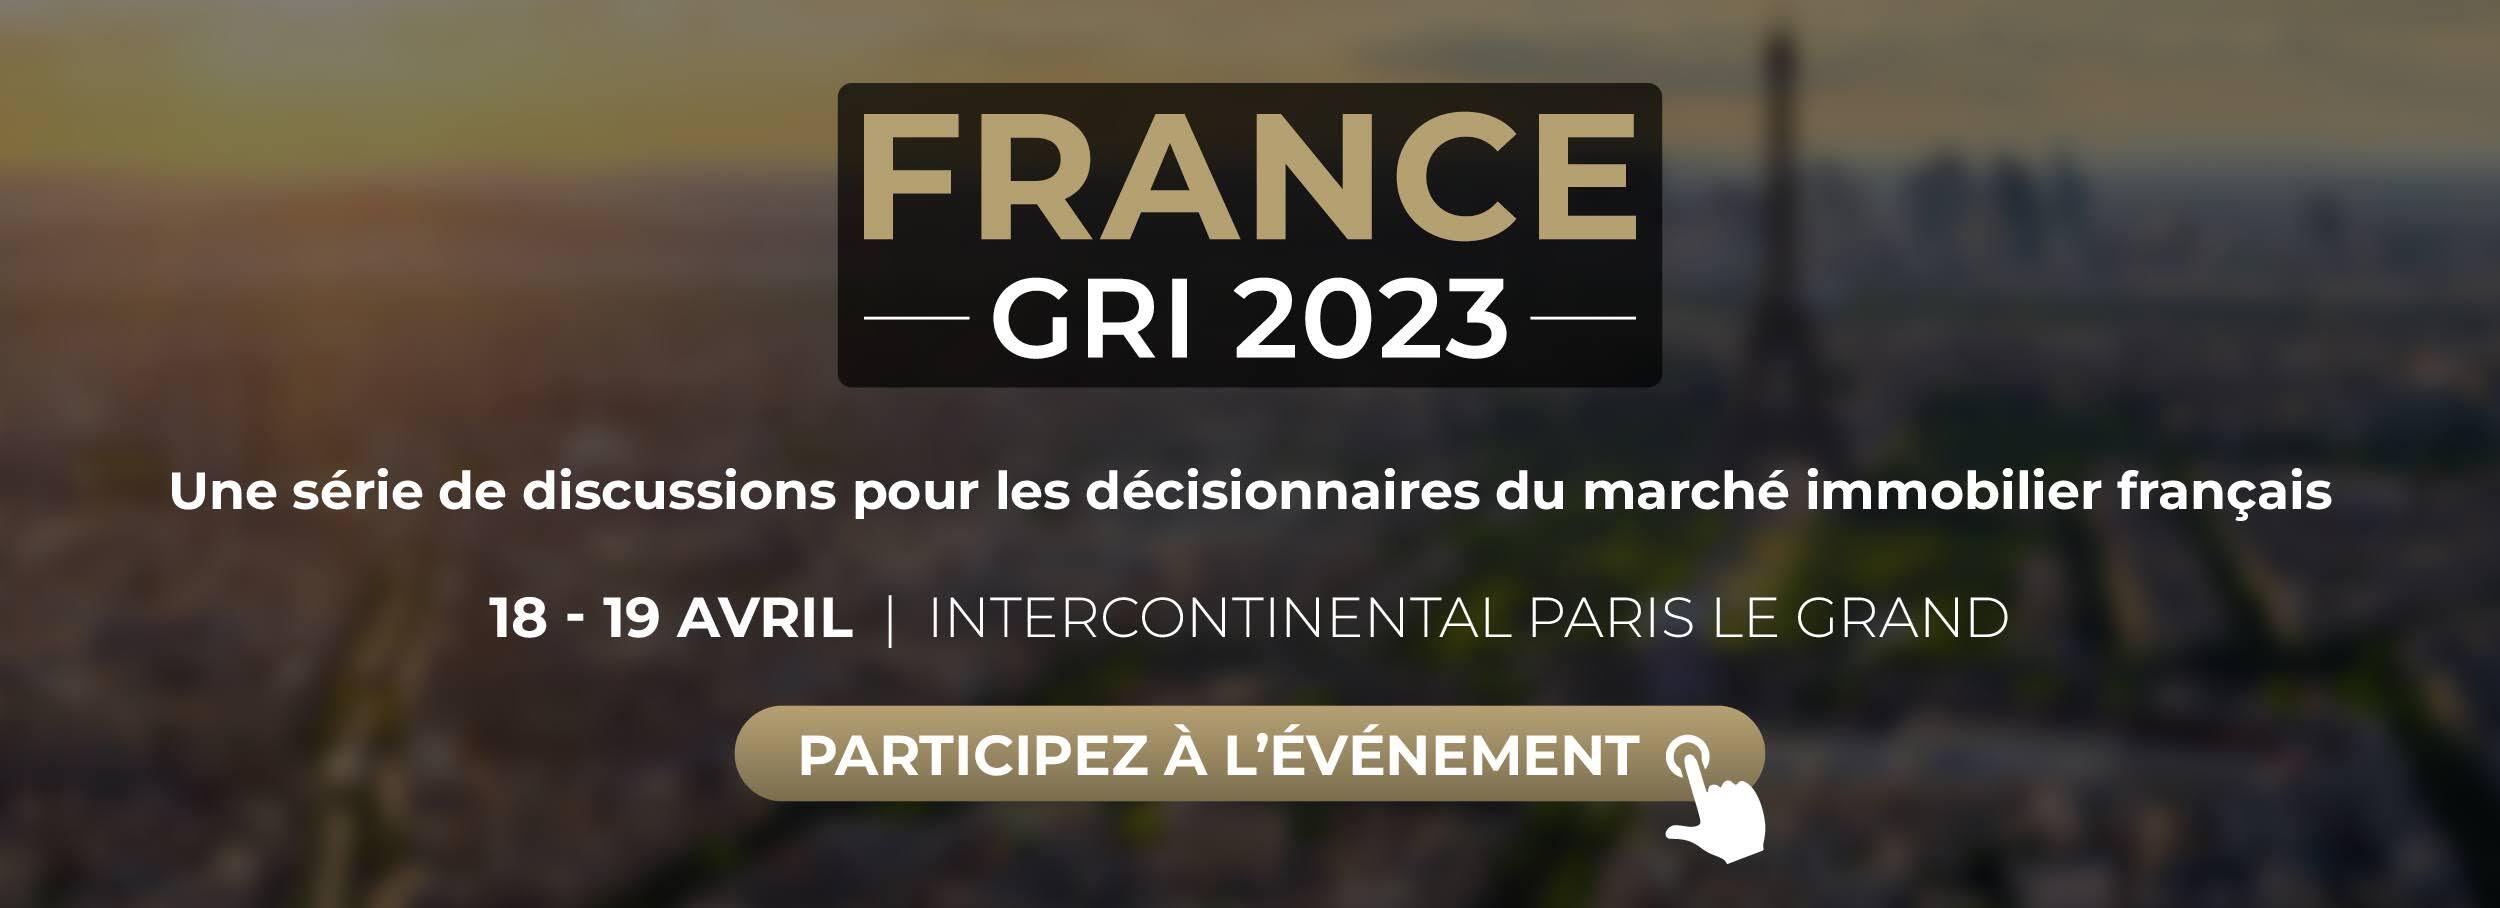 France GRI 2023